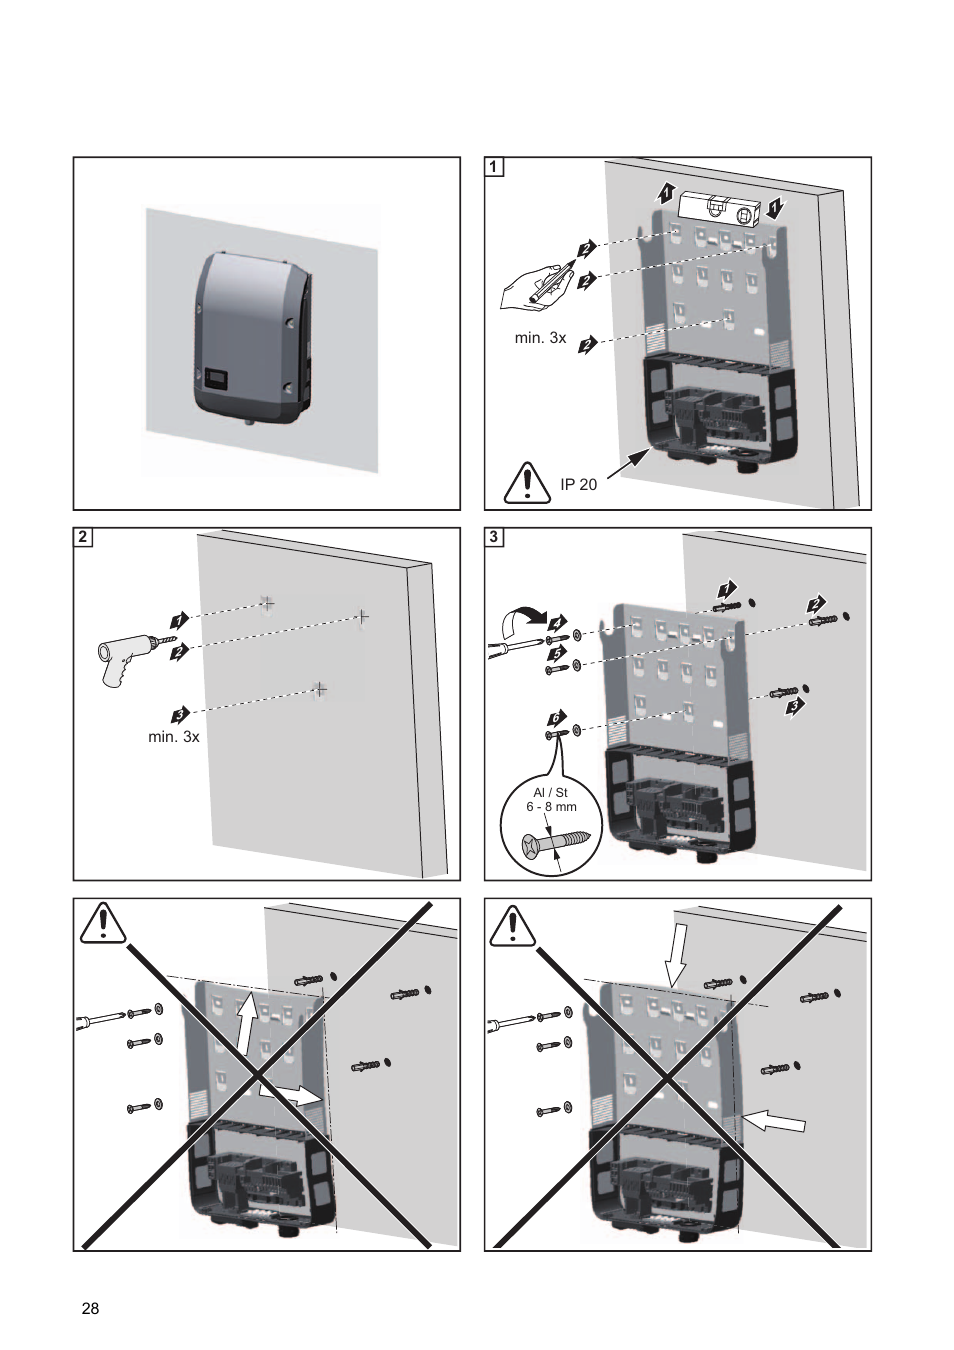 Ip 20 min. 3x 1, Min. 3x 2 | Fronius Primo Installation User Manual | Page 30 / 48